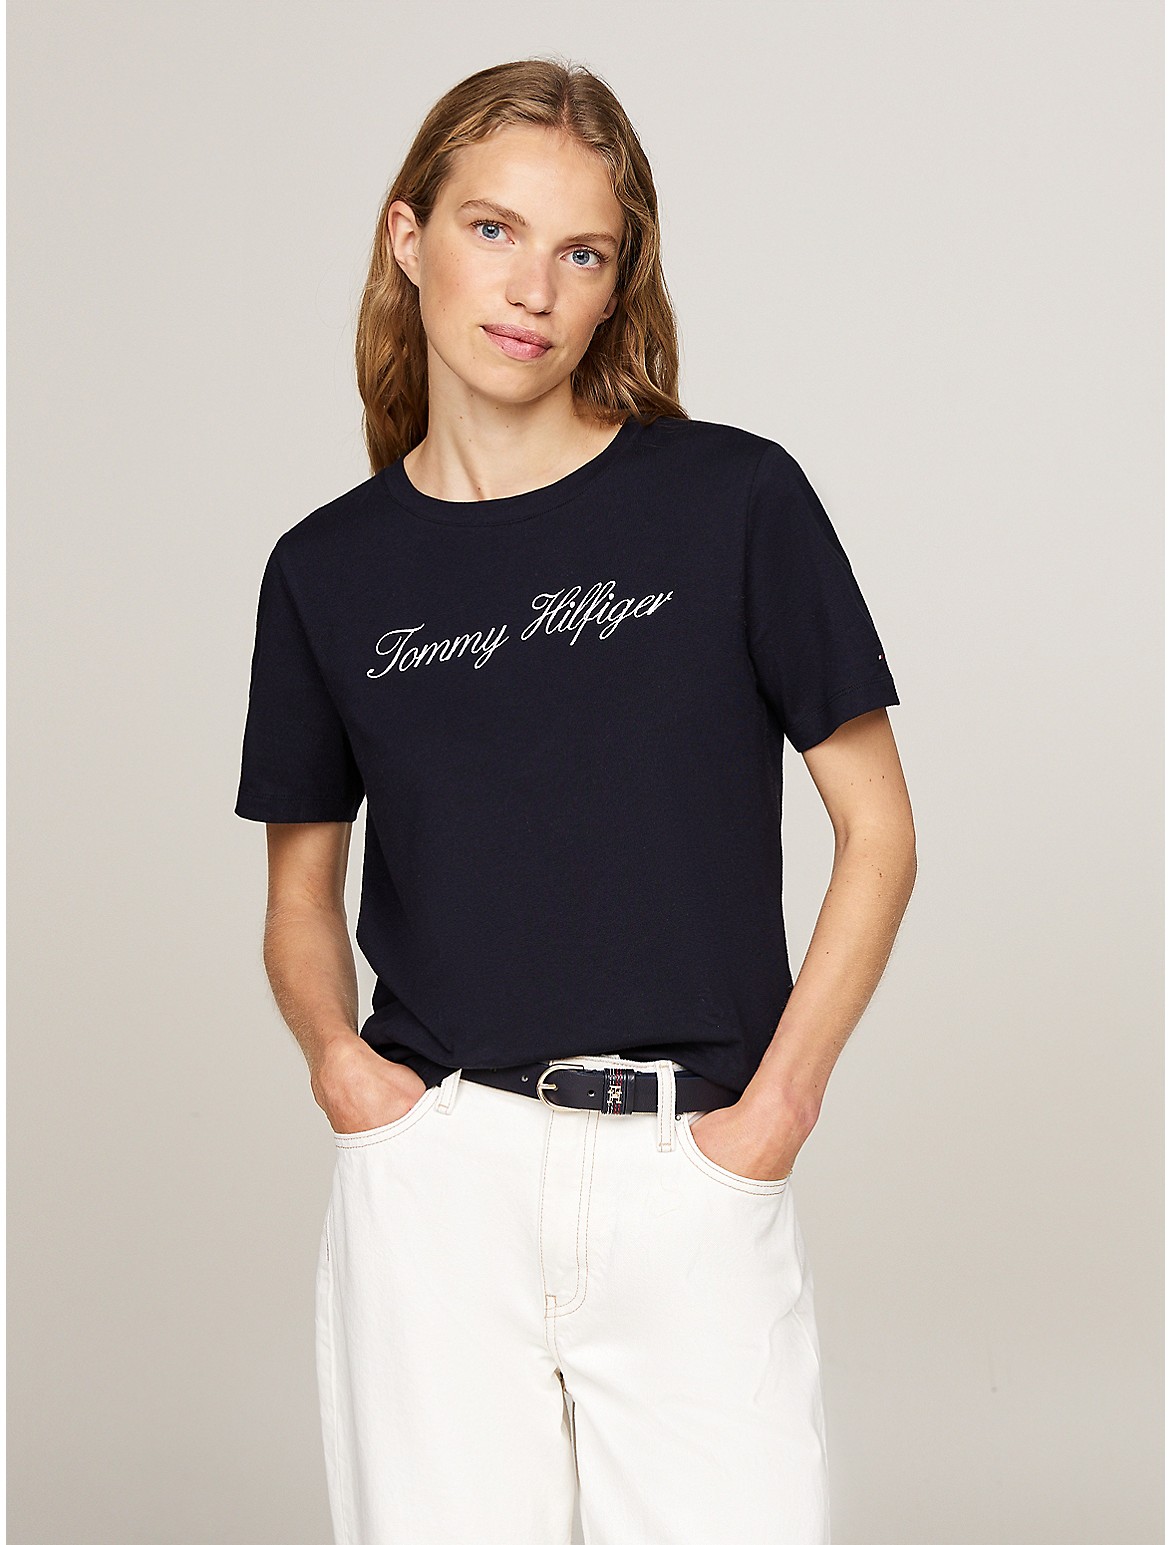 Tommy Hilfiger Women's Embroidered Script Logo T-Shirt